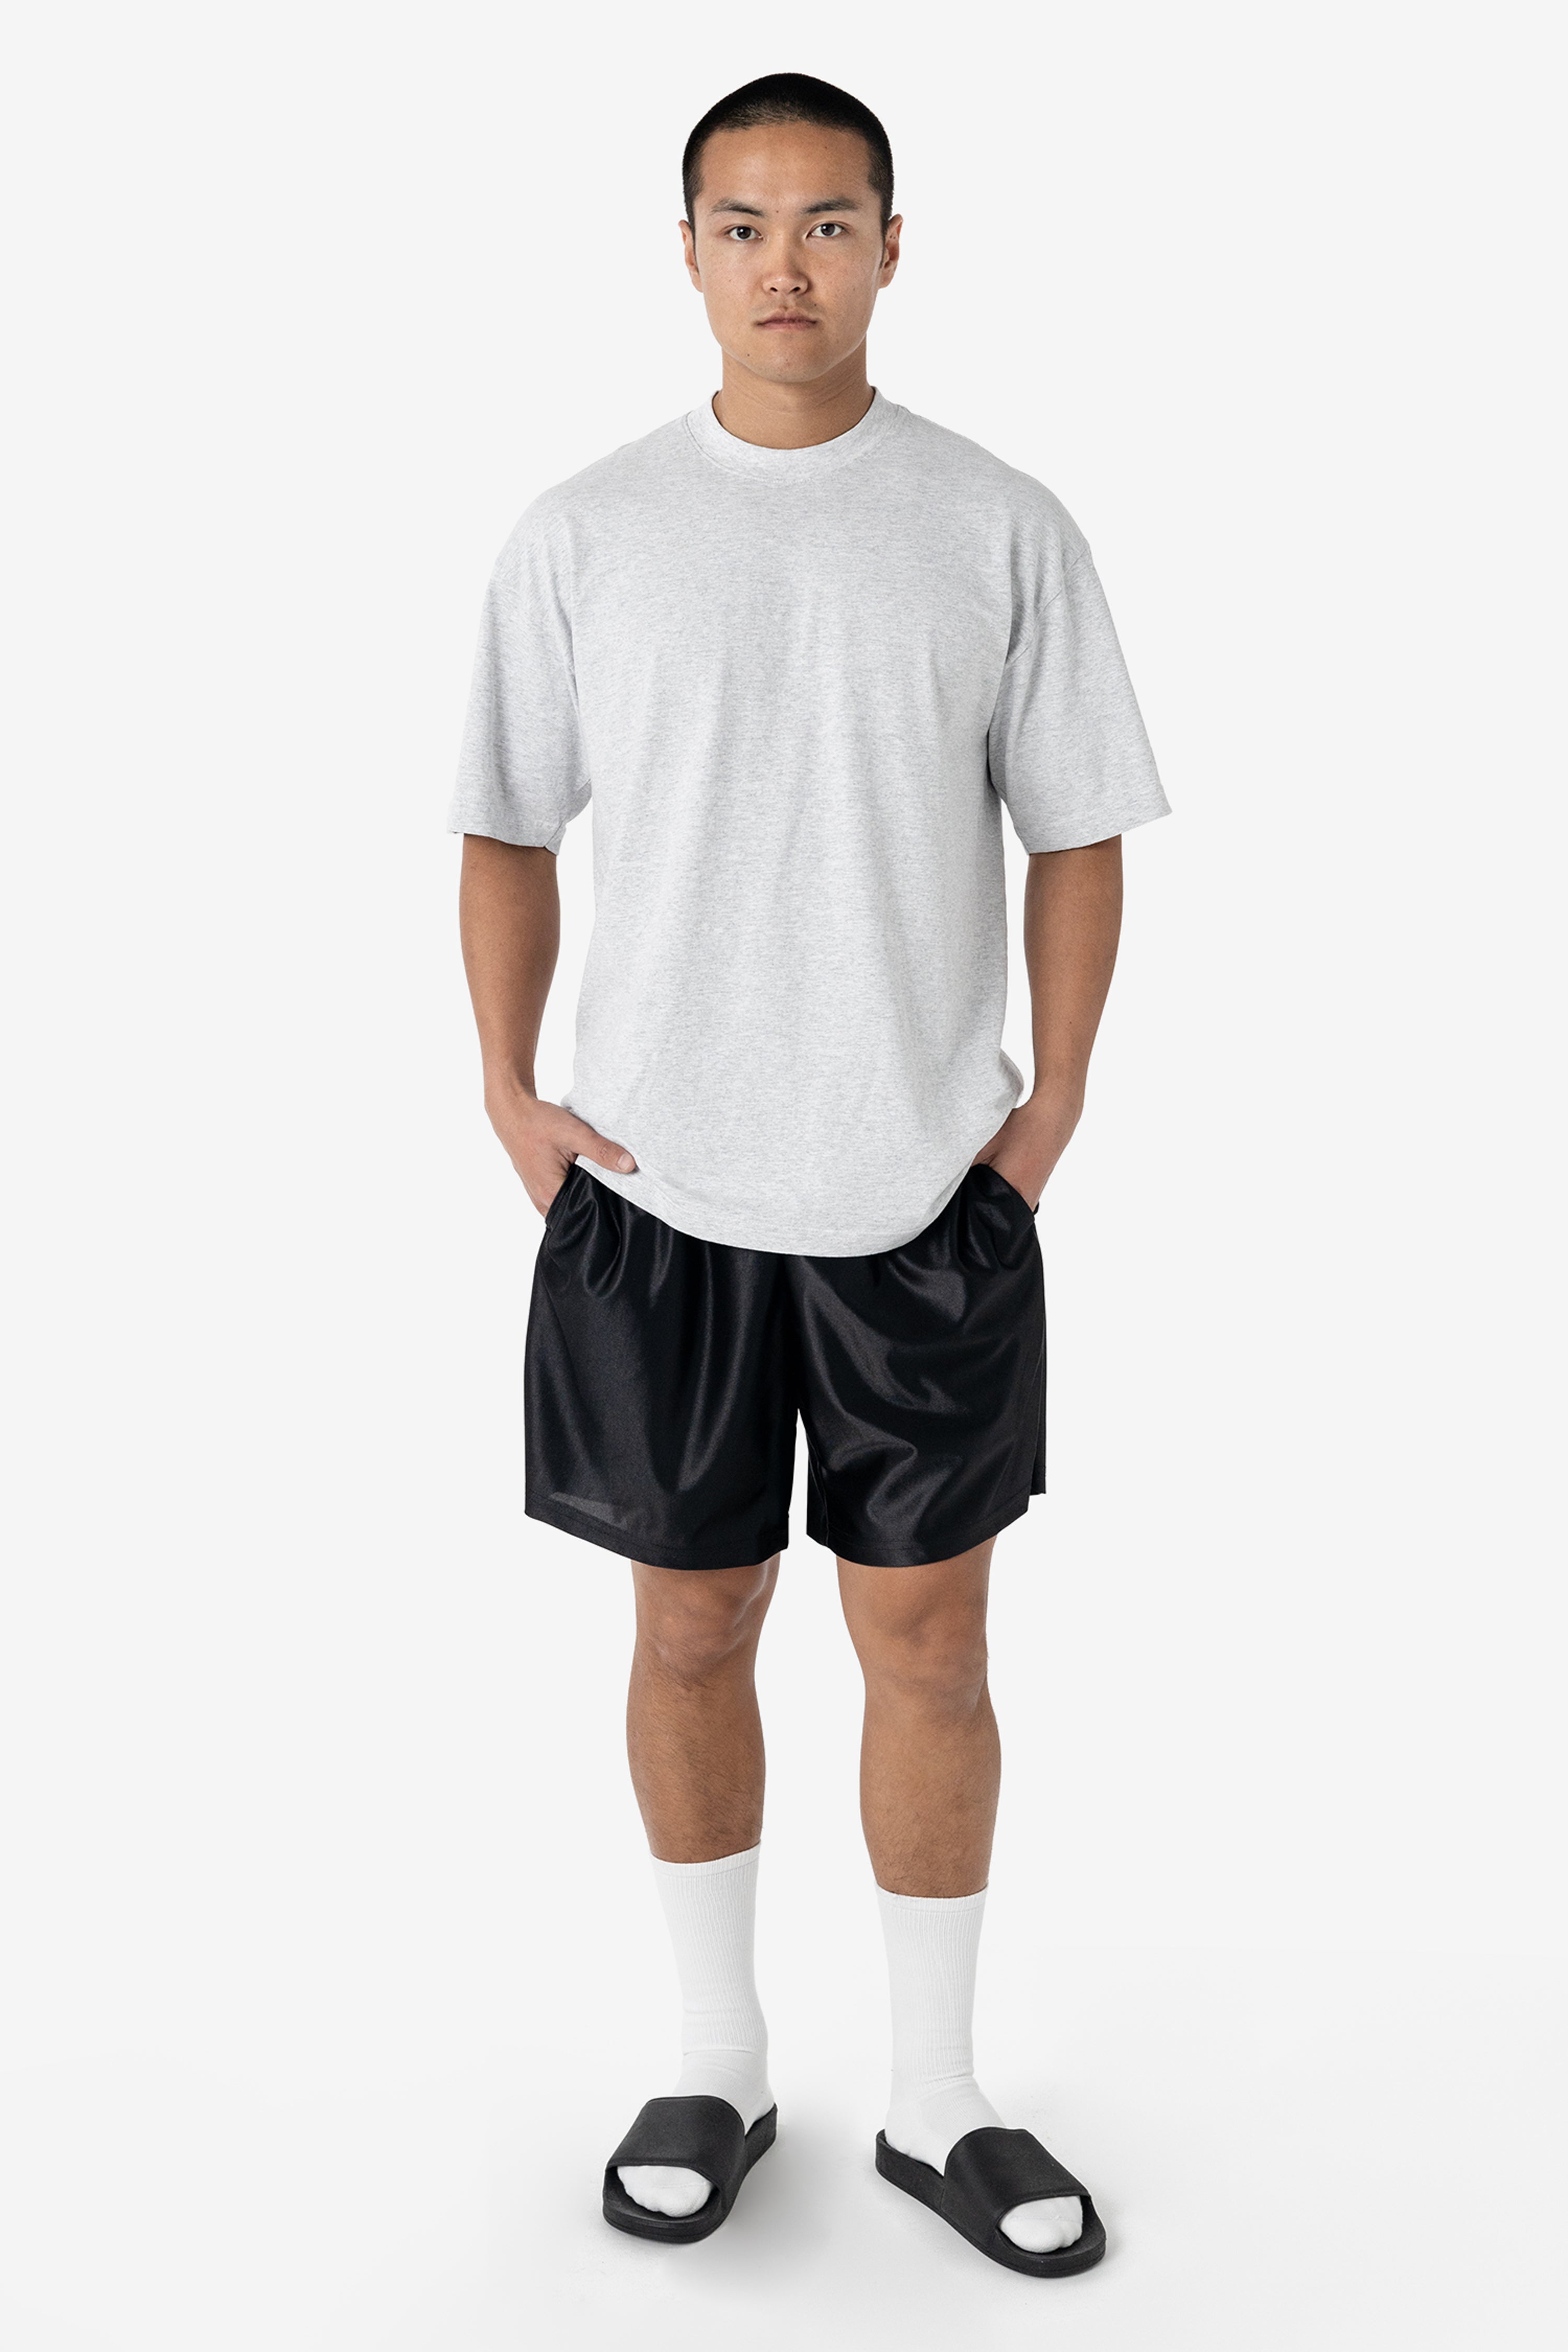 Dazzle shorts bundle